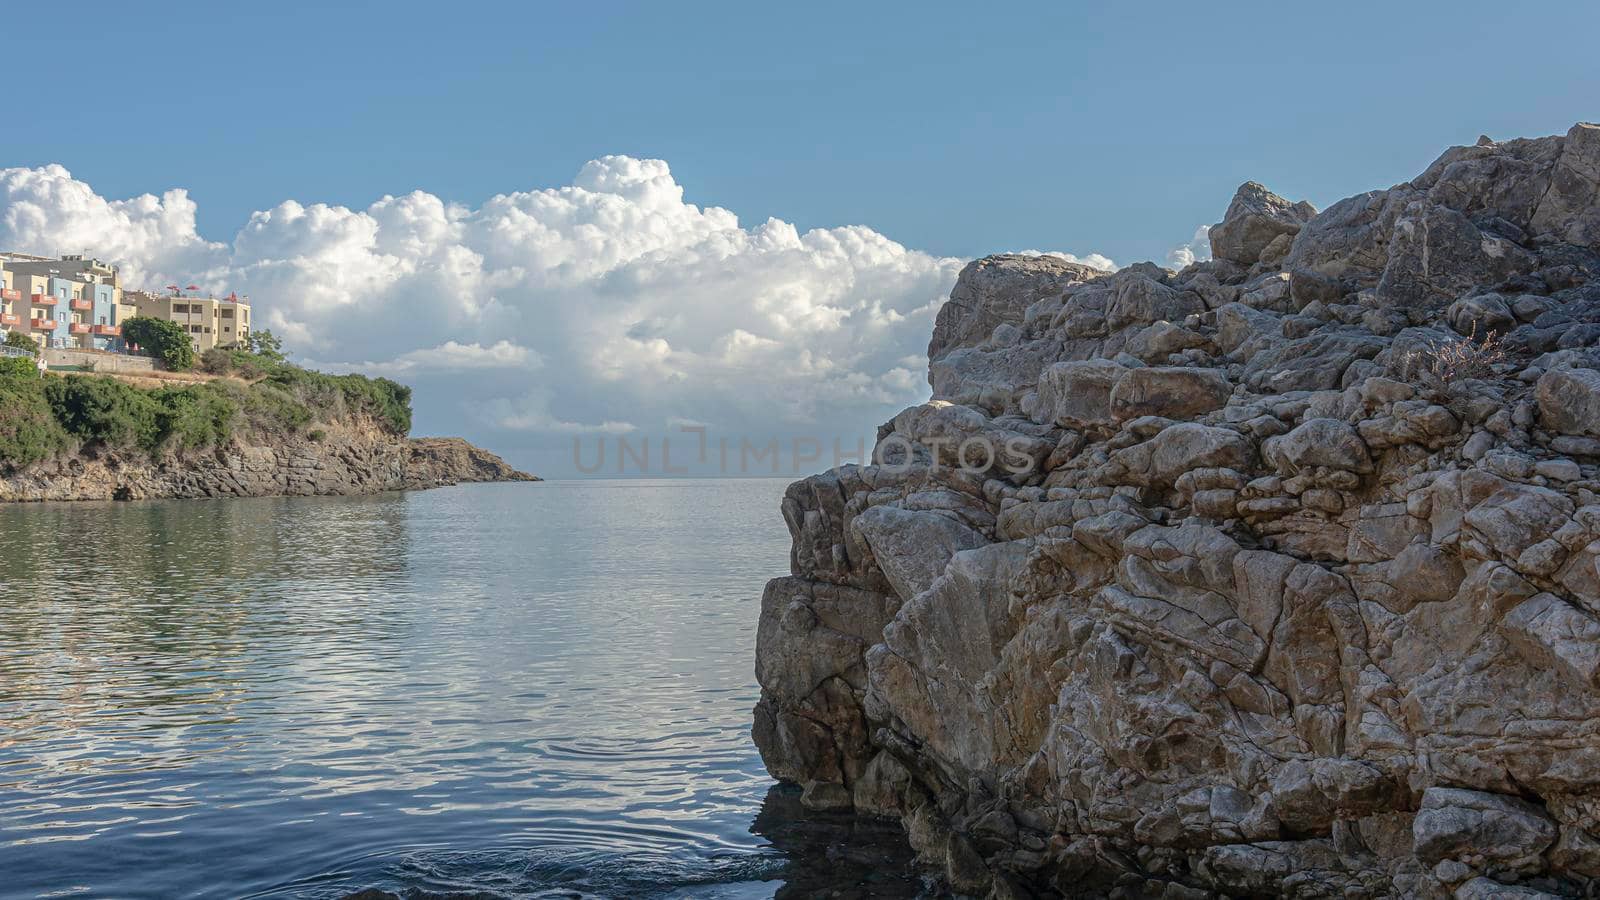 Seascape. Apartments on the rocky seashore (Greece, Crete). Stock photo. by Grommik